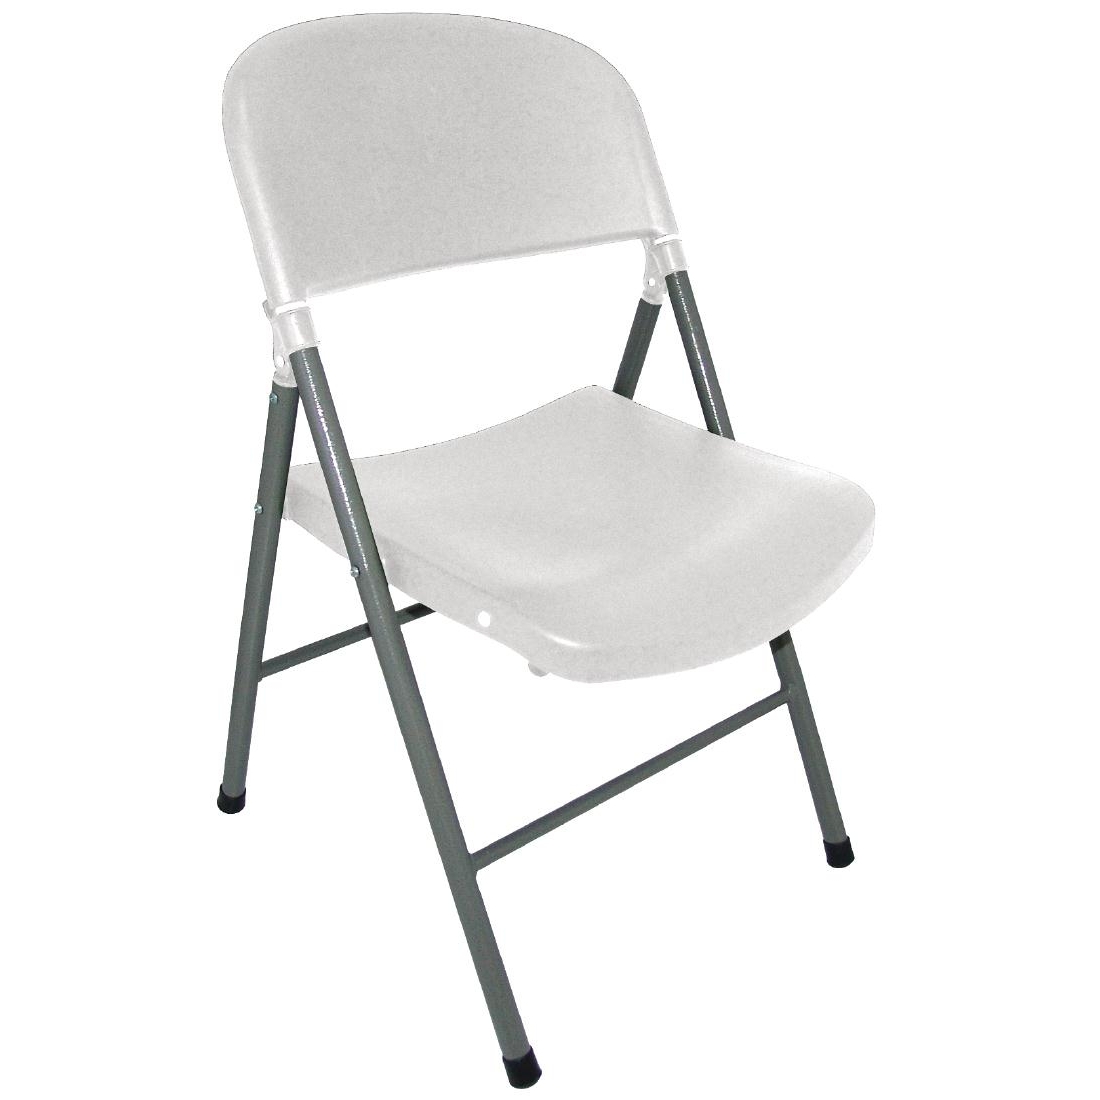 CE692 Bolero Foldaway utility chairs White/Black (Pack of 2)